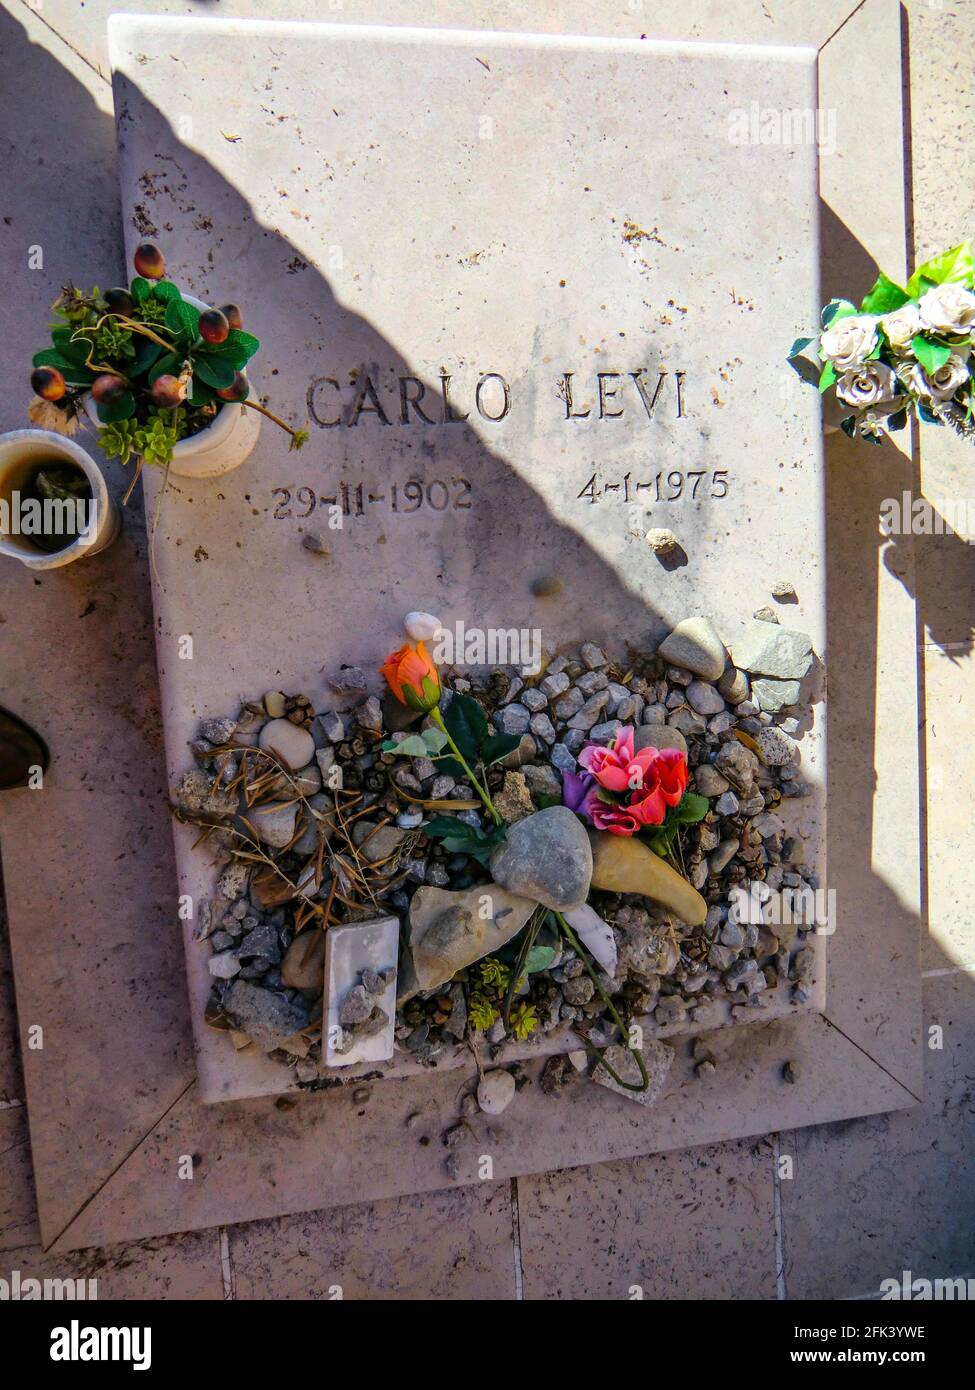 Carlo Levi's Grave Yard, an Italian-Jewish painter, writer, activist,  anti-fascist and doctor, Grave in Aliano Cemetery, Basilicata, Italy,  Europe Stock Photo - Alamy